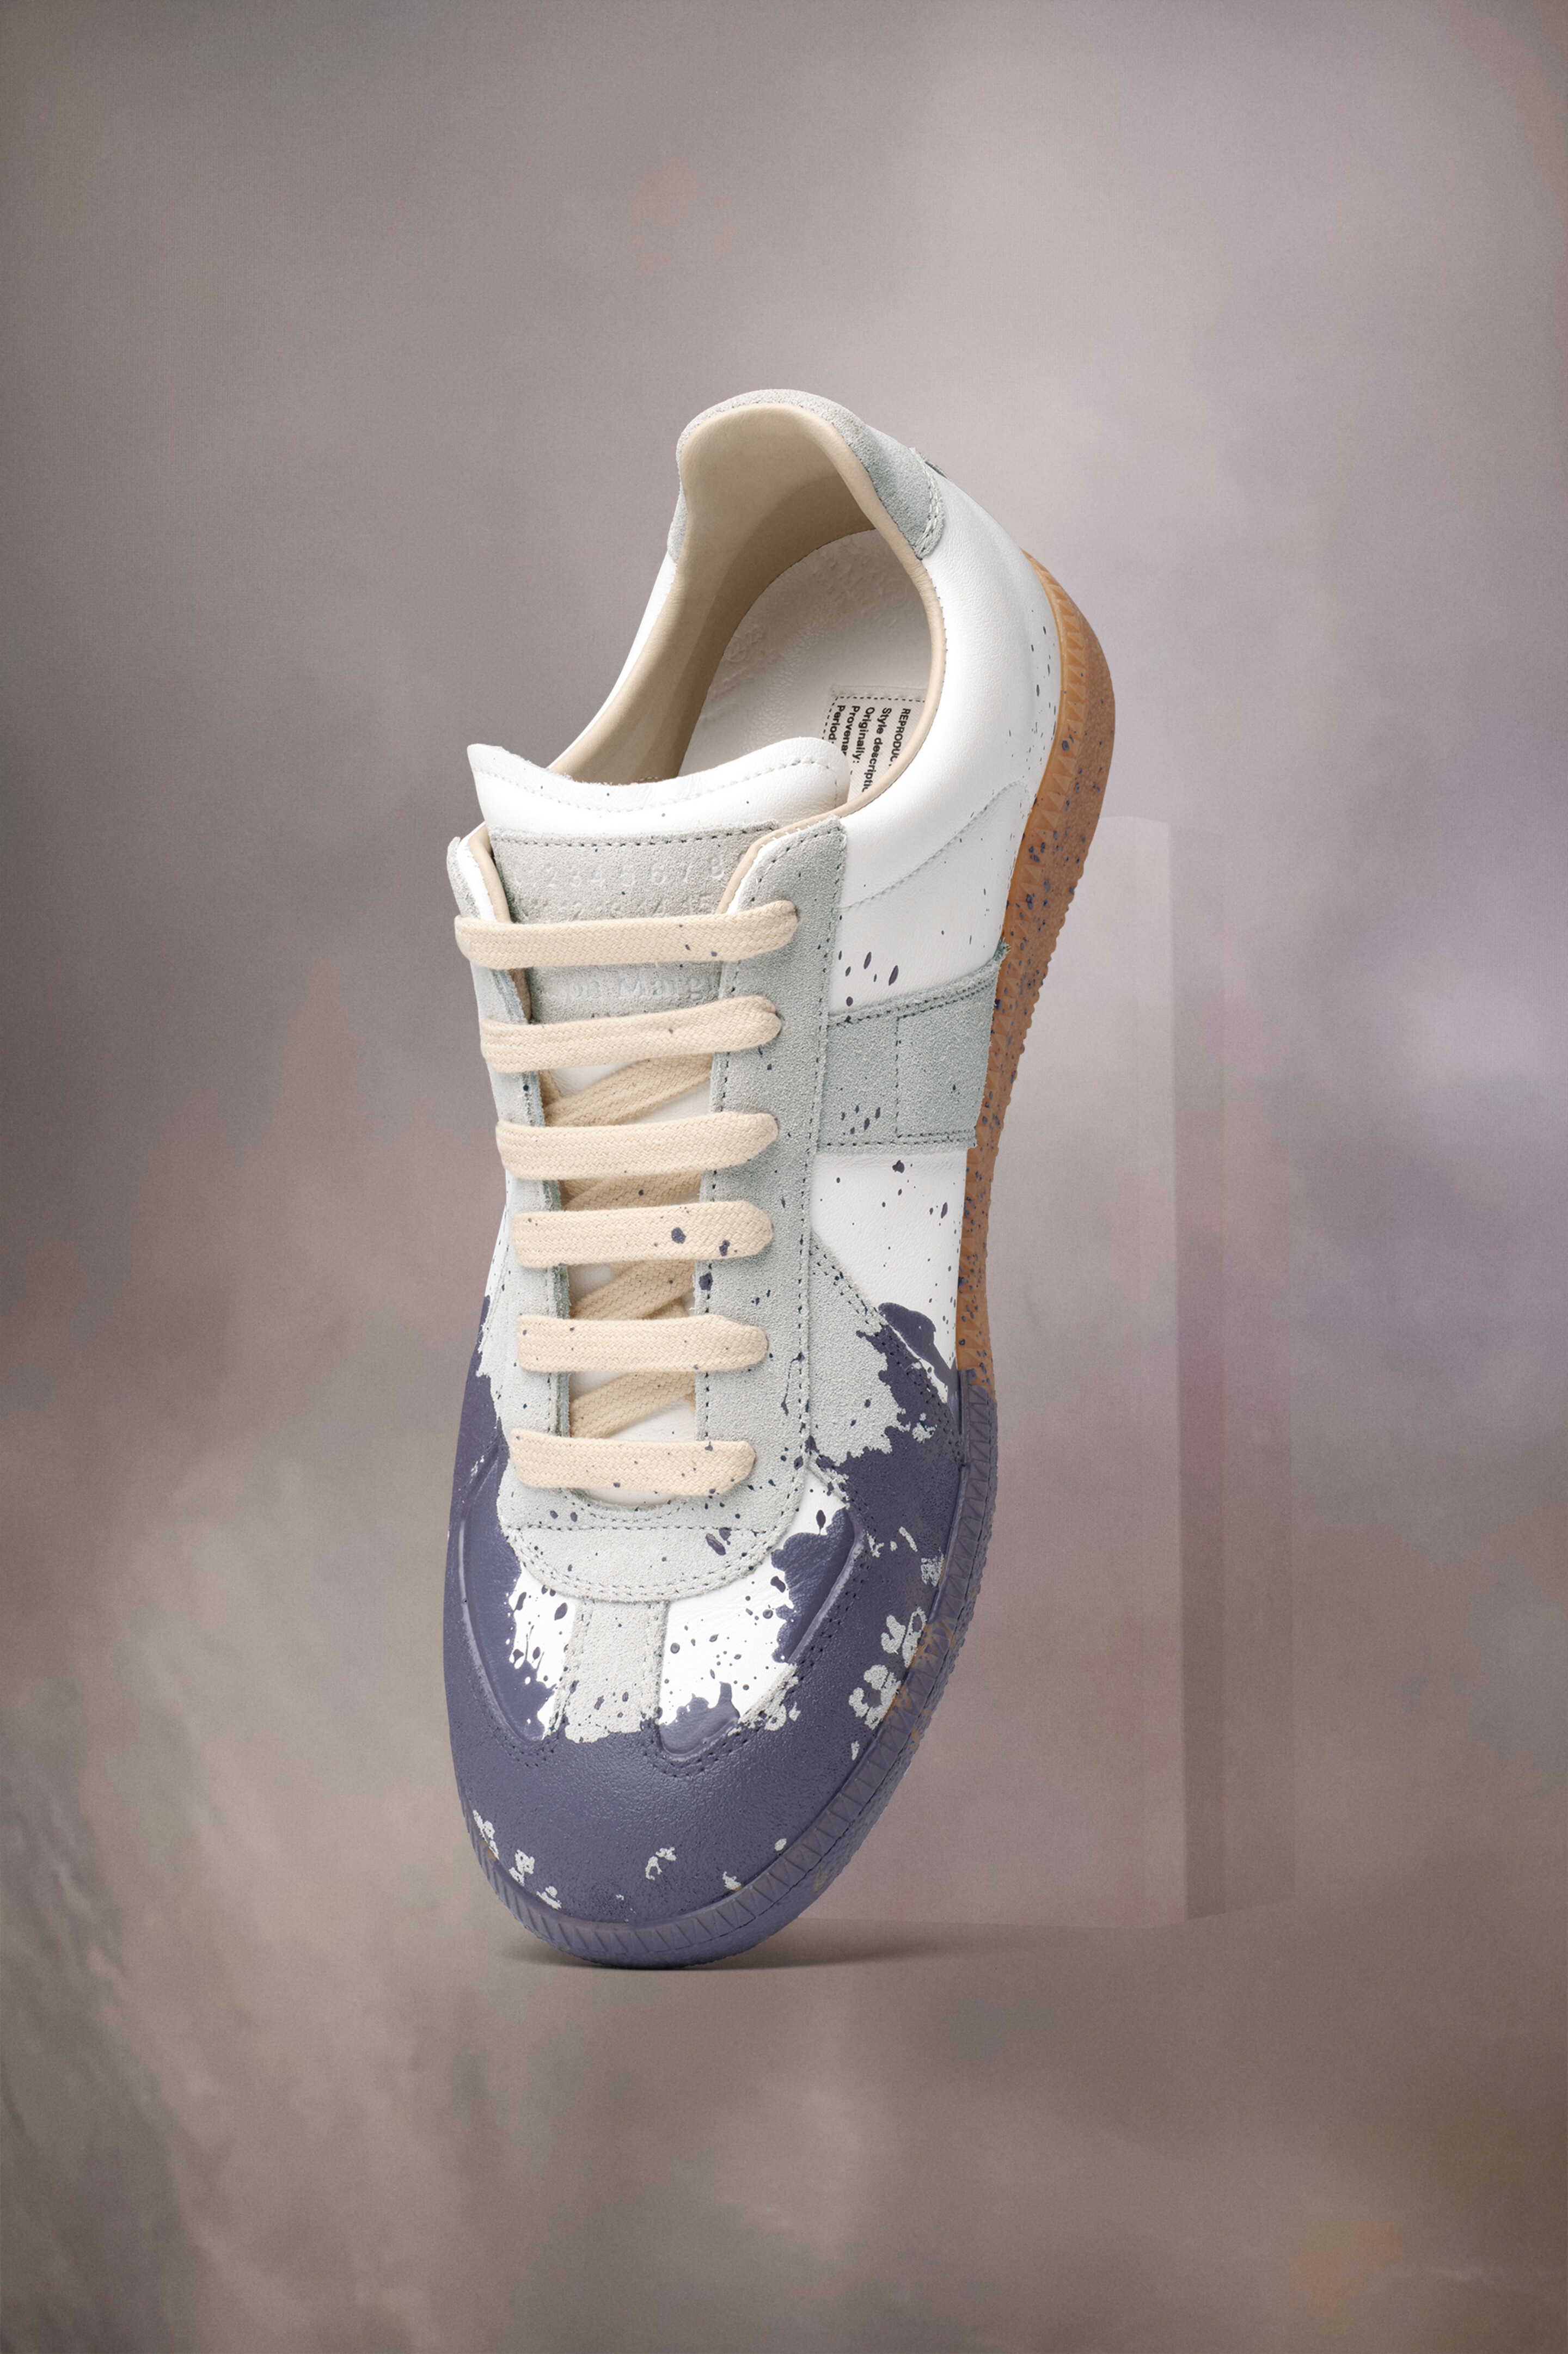 Paint Replica sneaker - 1